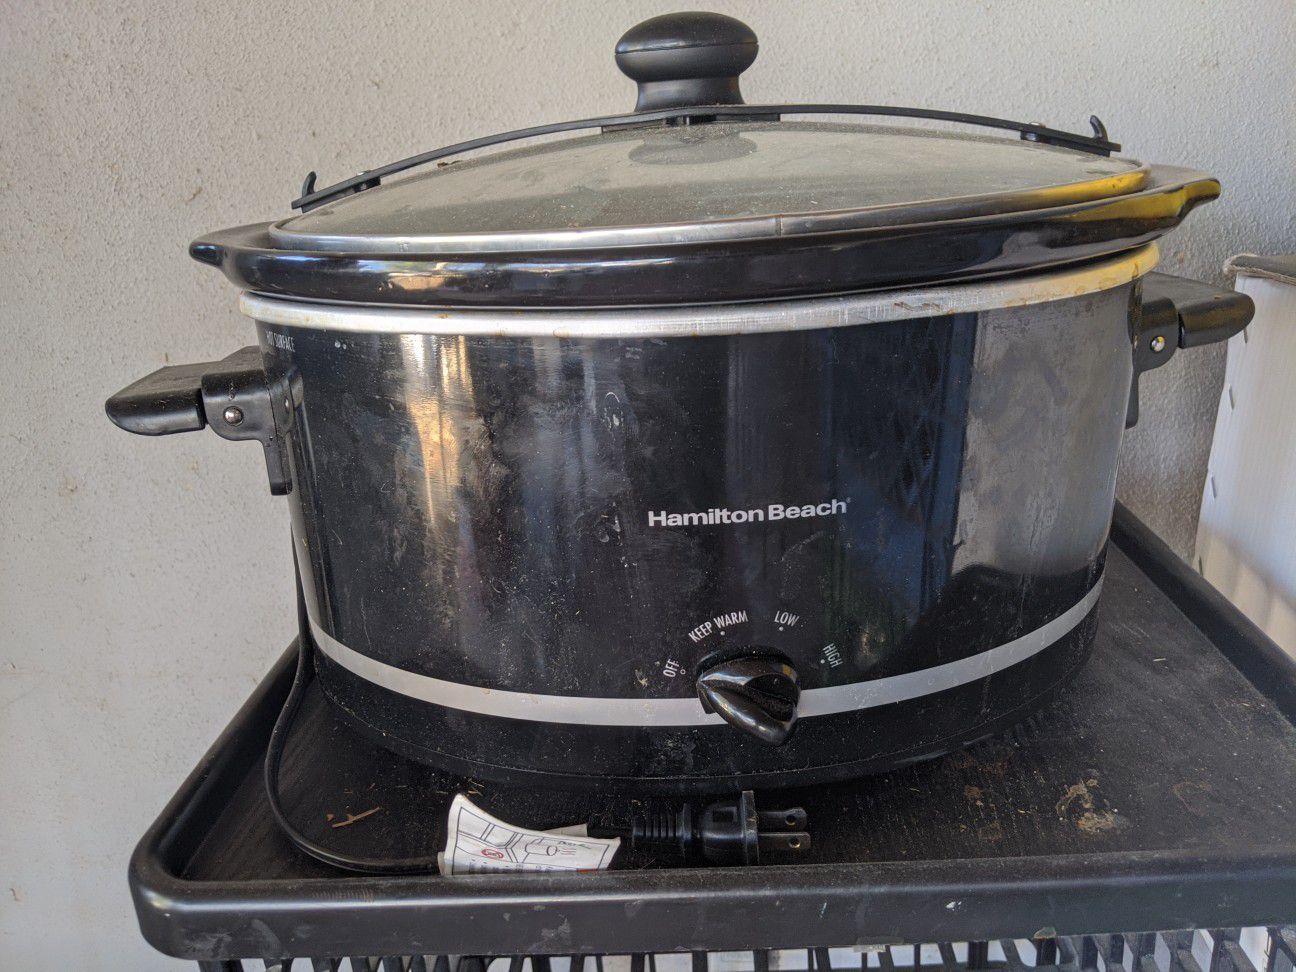 Hamilton Beach crock pots roast cooker pot